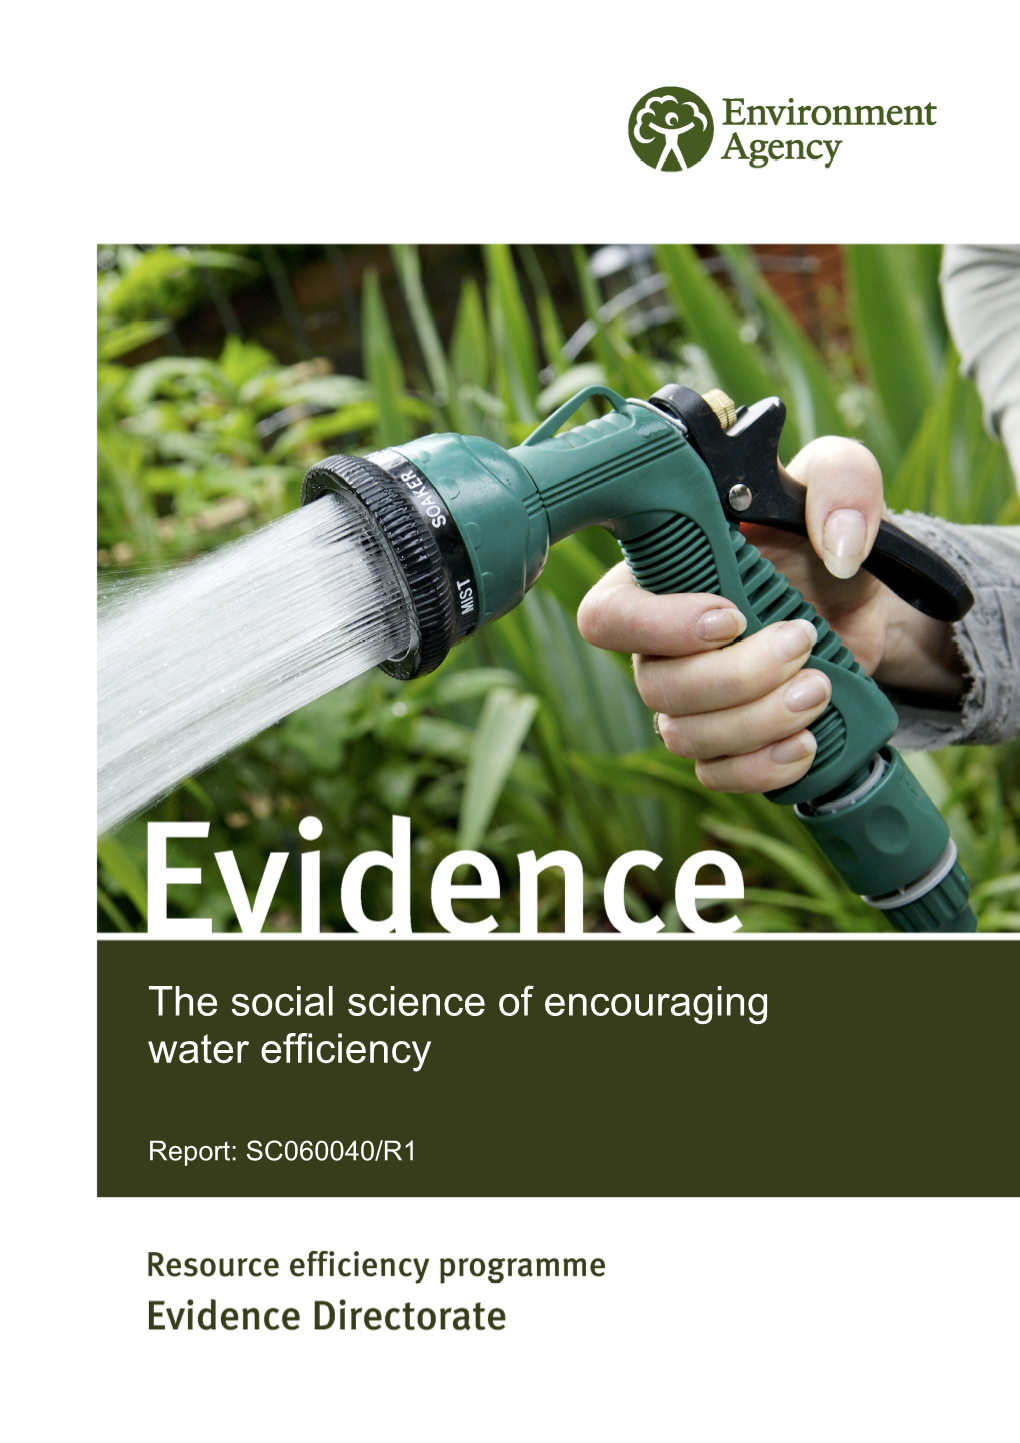 The Social Science of Encouraging Water Efficiency